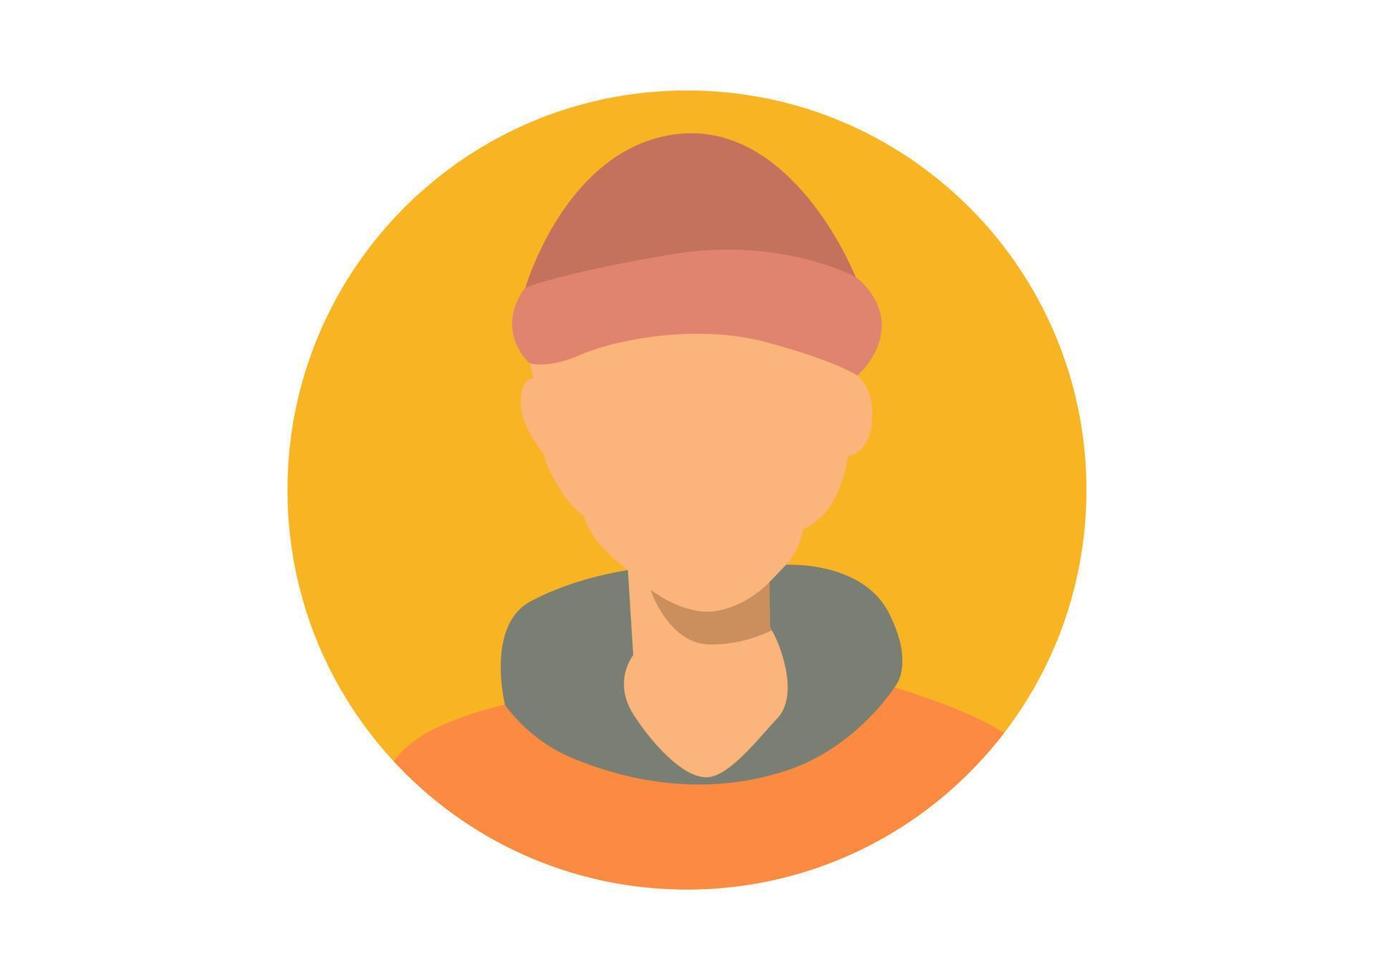 diseño de ilustración de cara masculina con sombrero vector